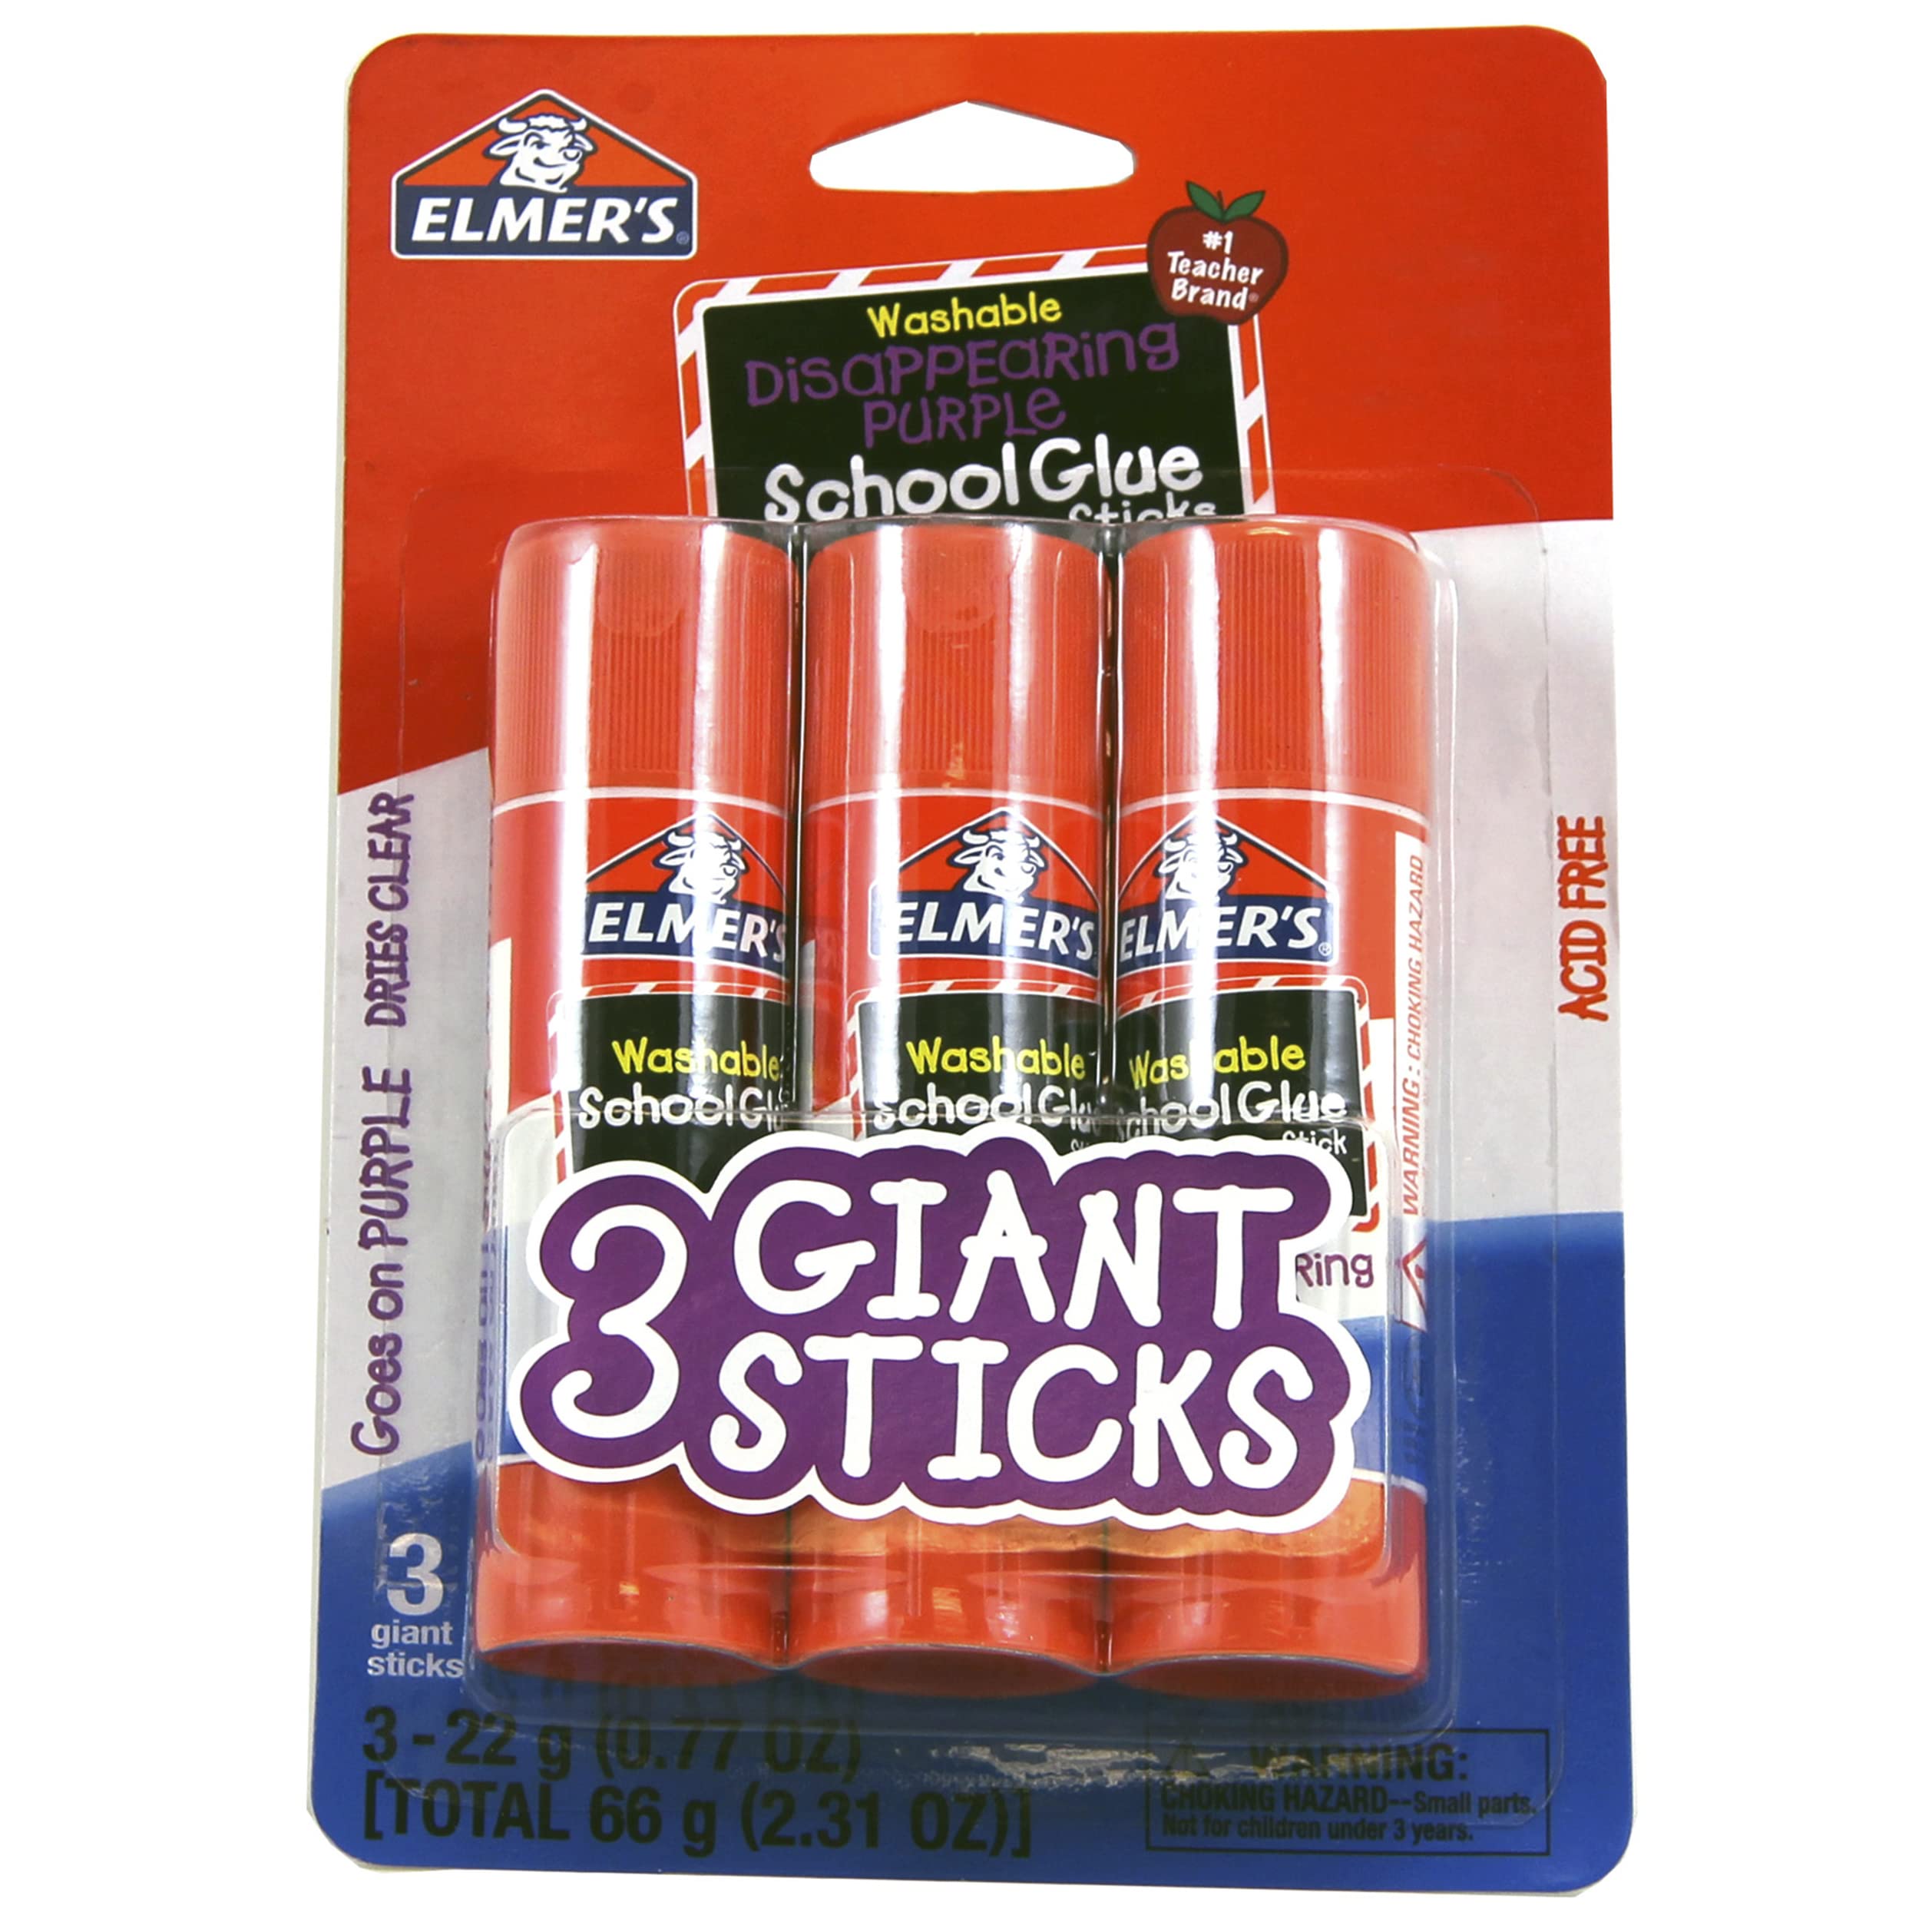 Elmer's Disappearing Purple Washable School Glue Sticks, 0.77 oz, 3 Count